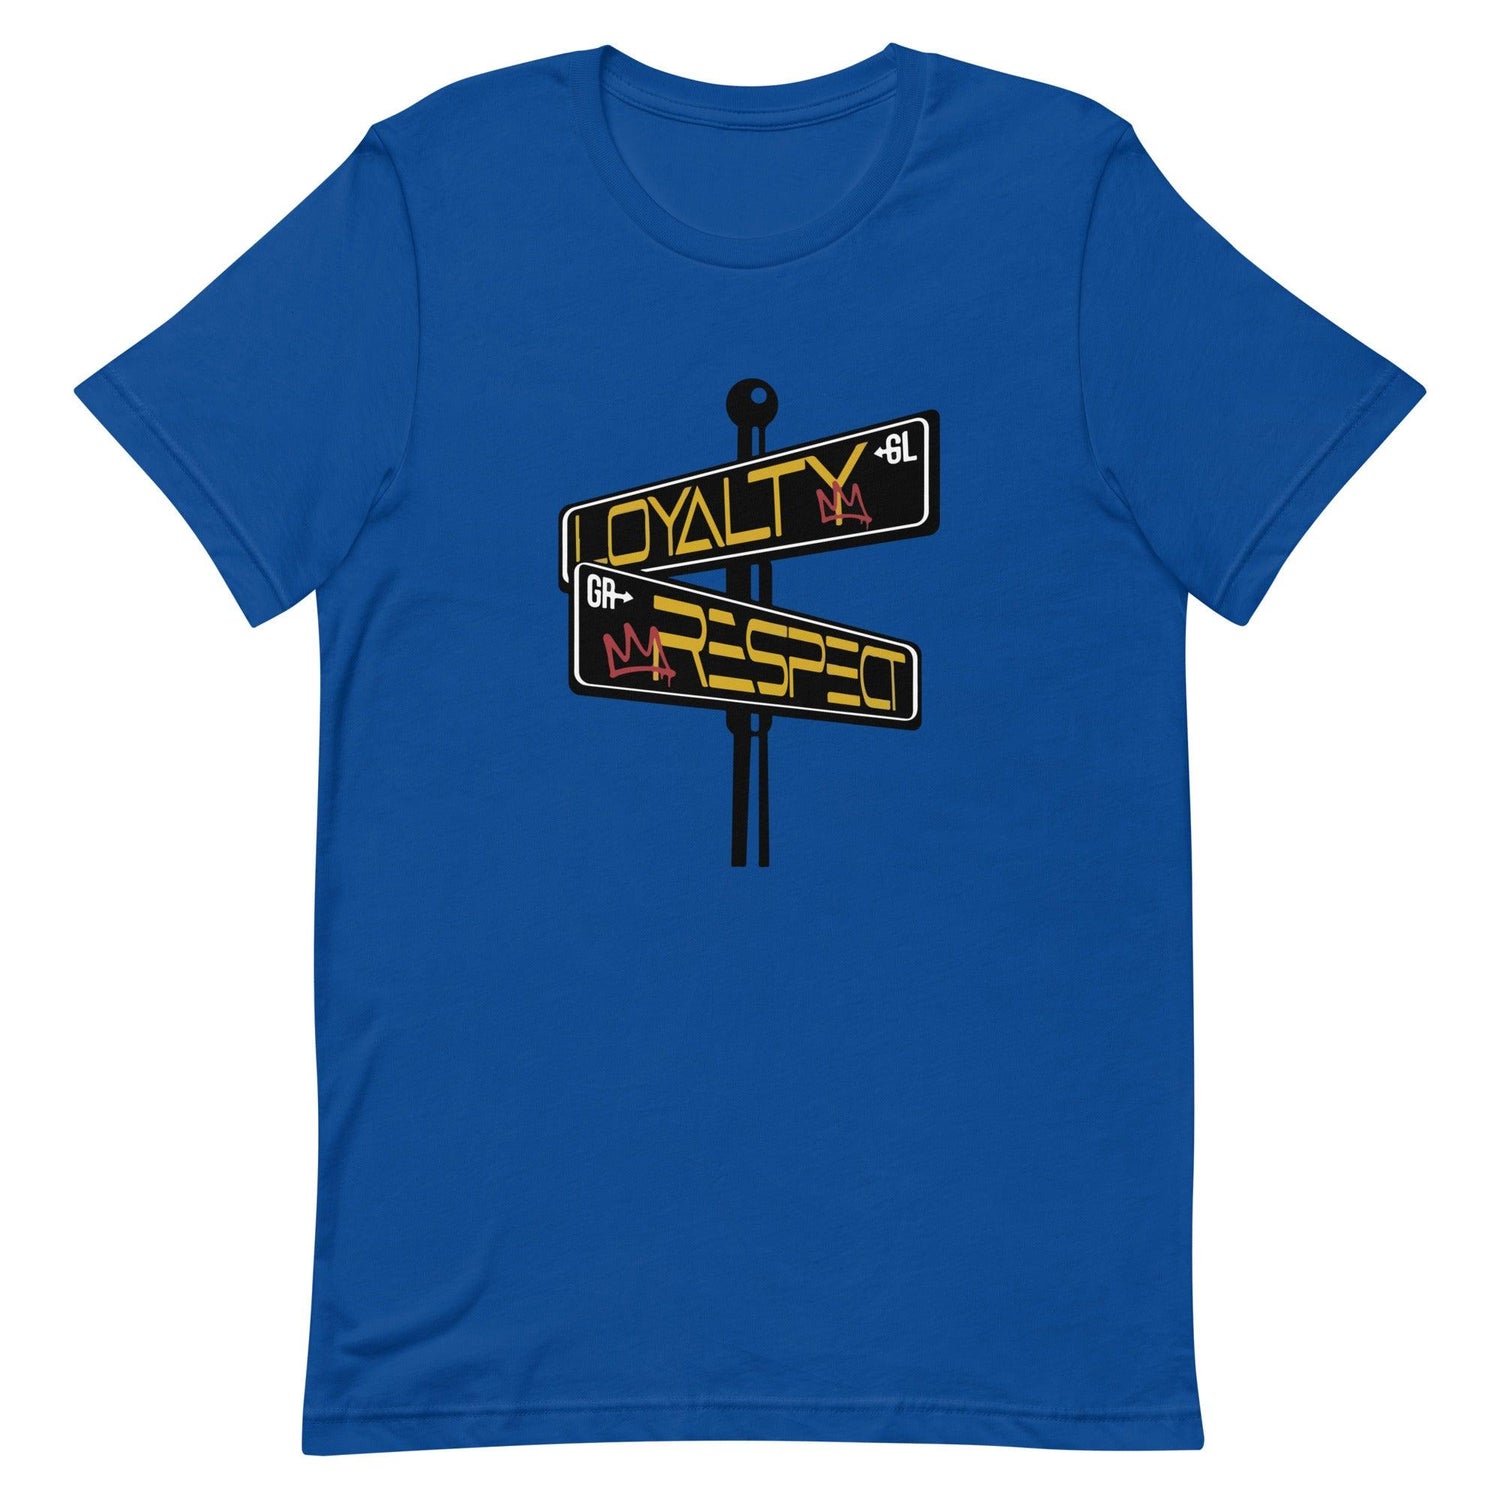 Kesean Carter "Essential" t-shirt - Fan Arch